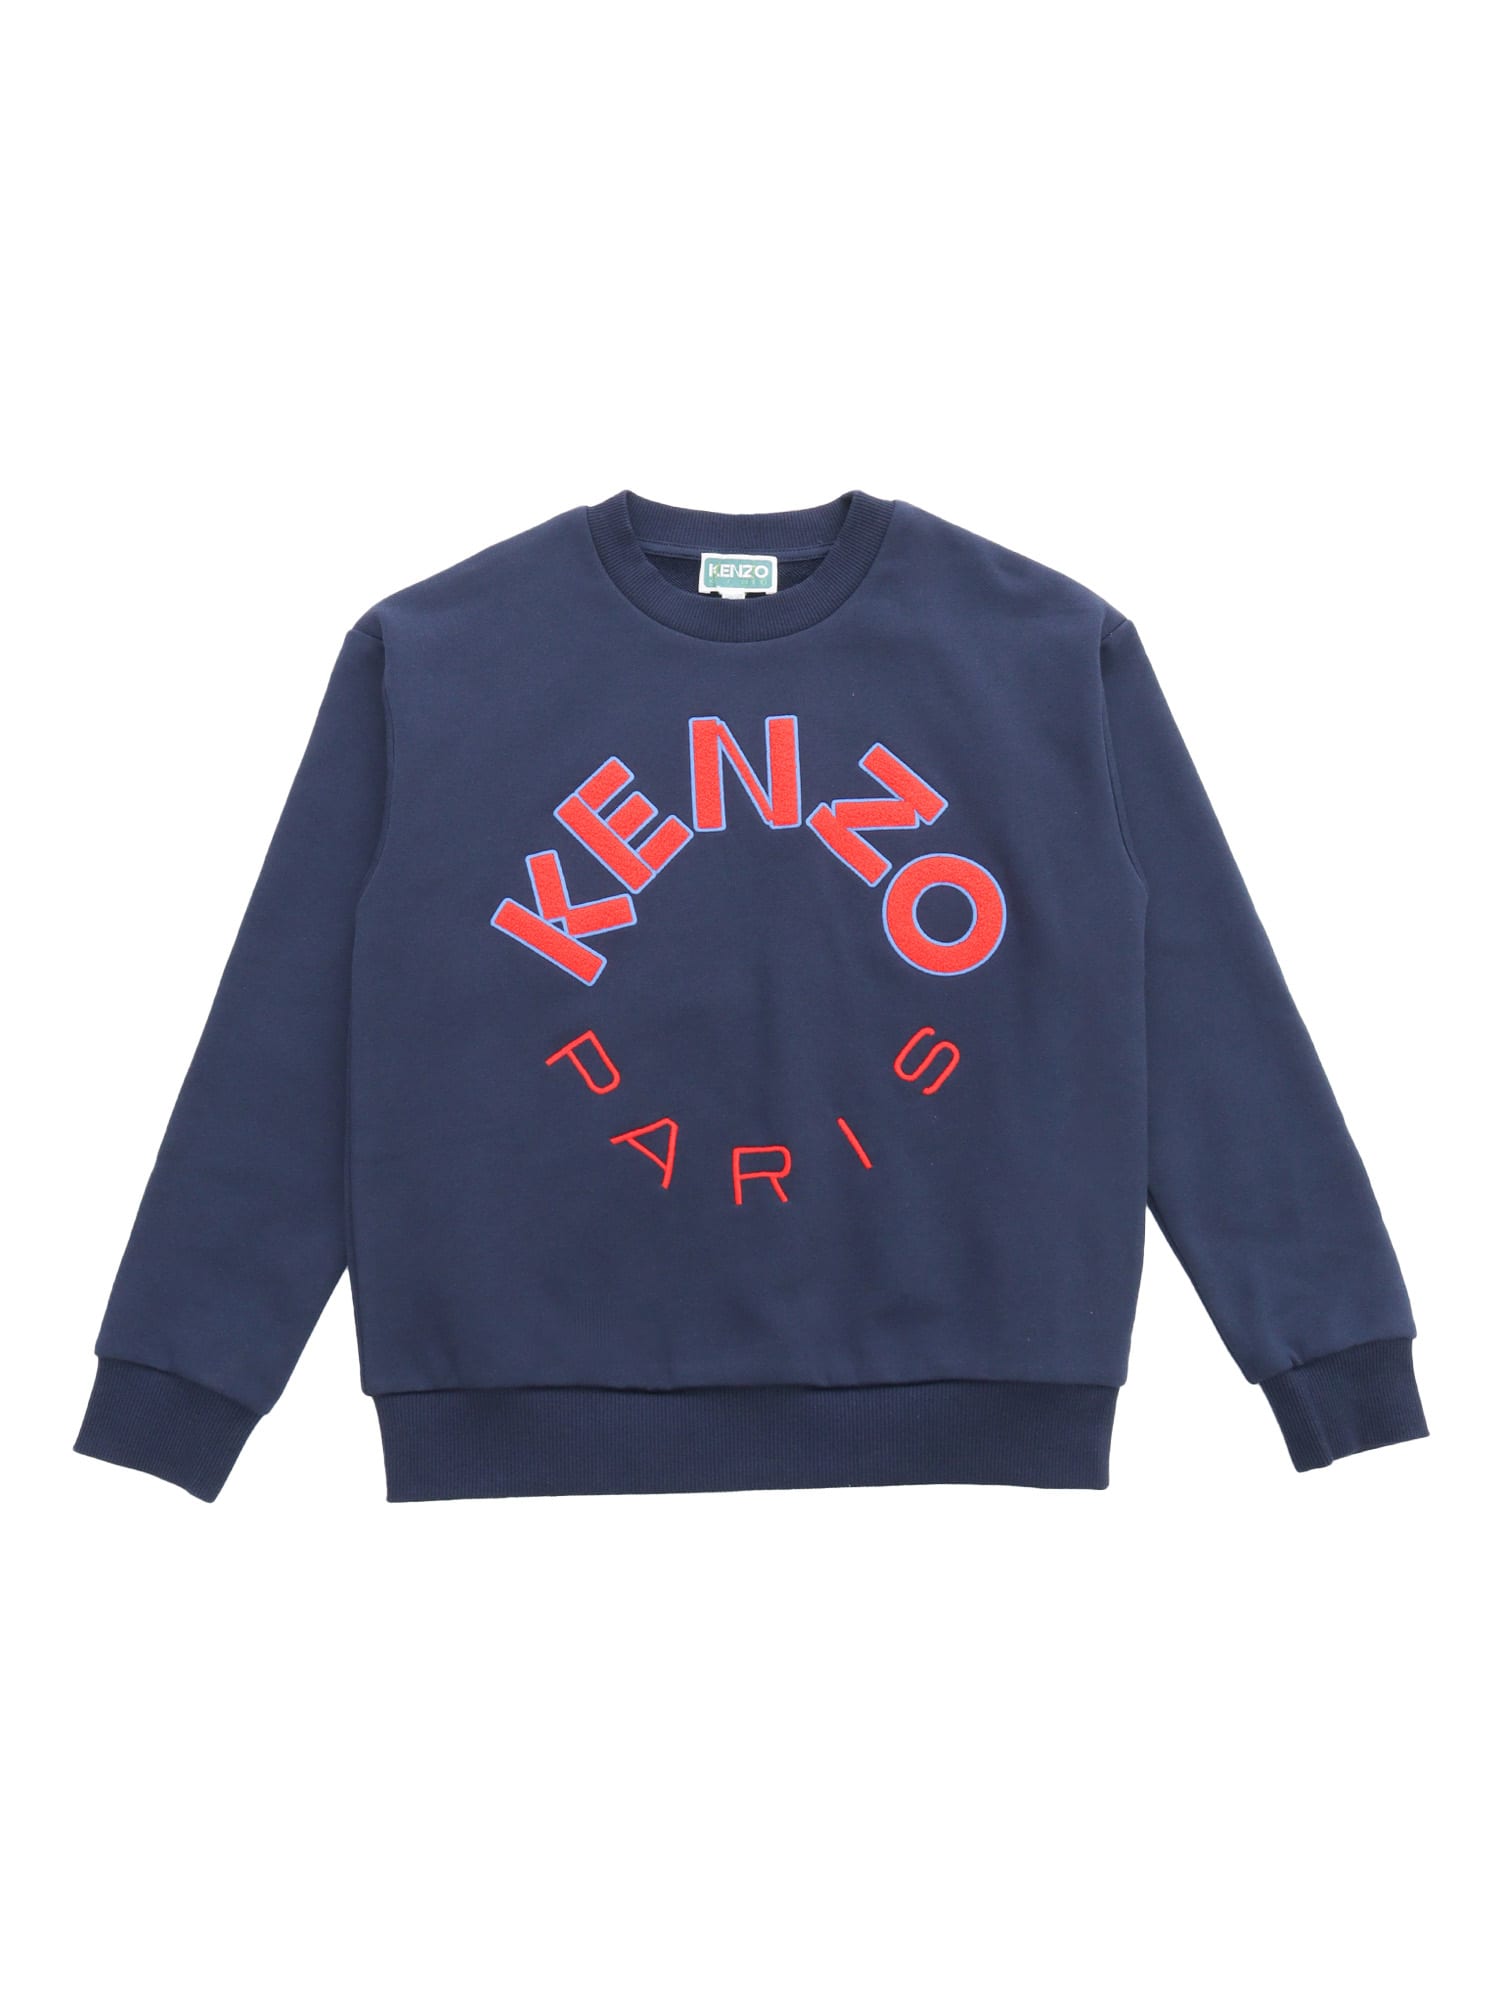 Shop Kenzo Blue Sweatshirt